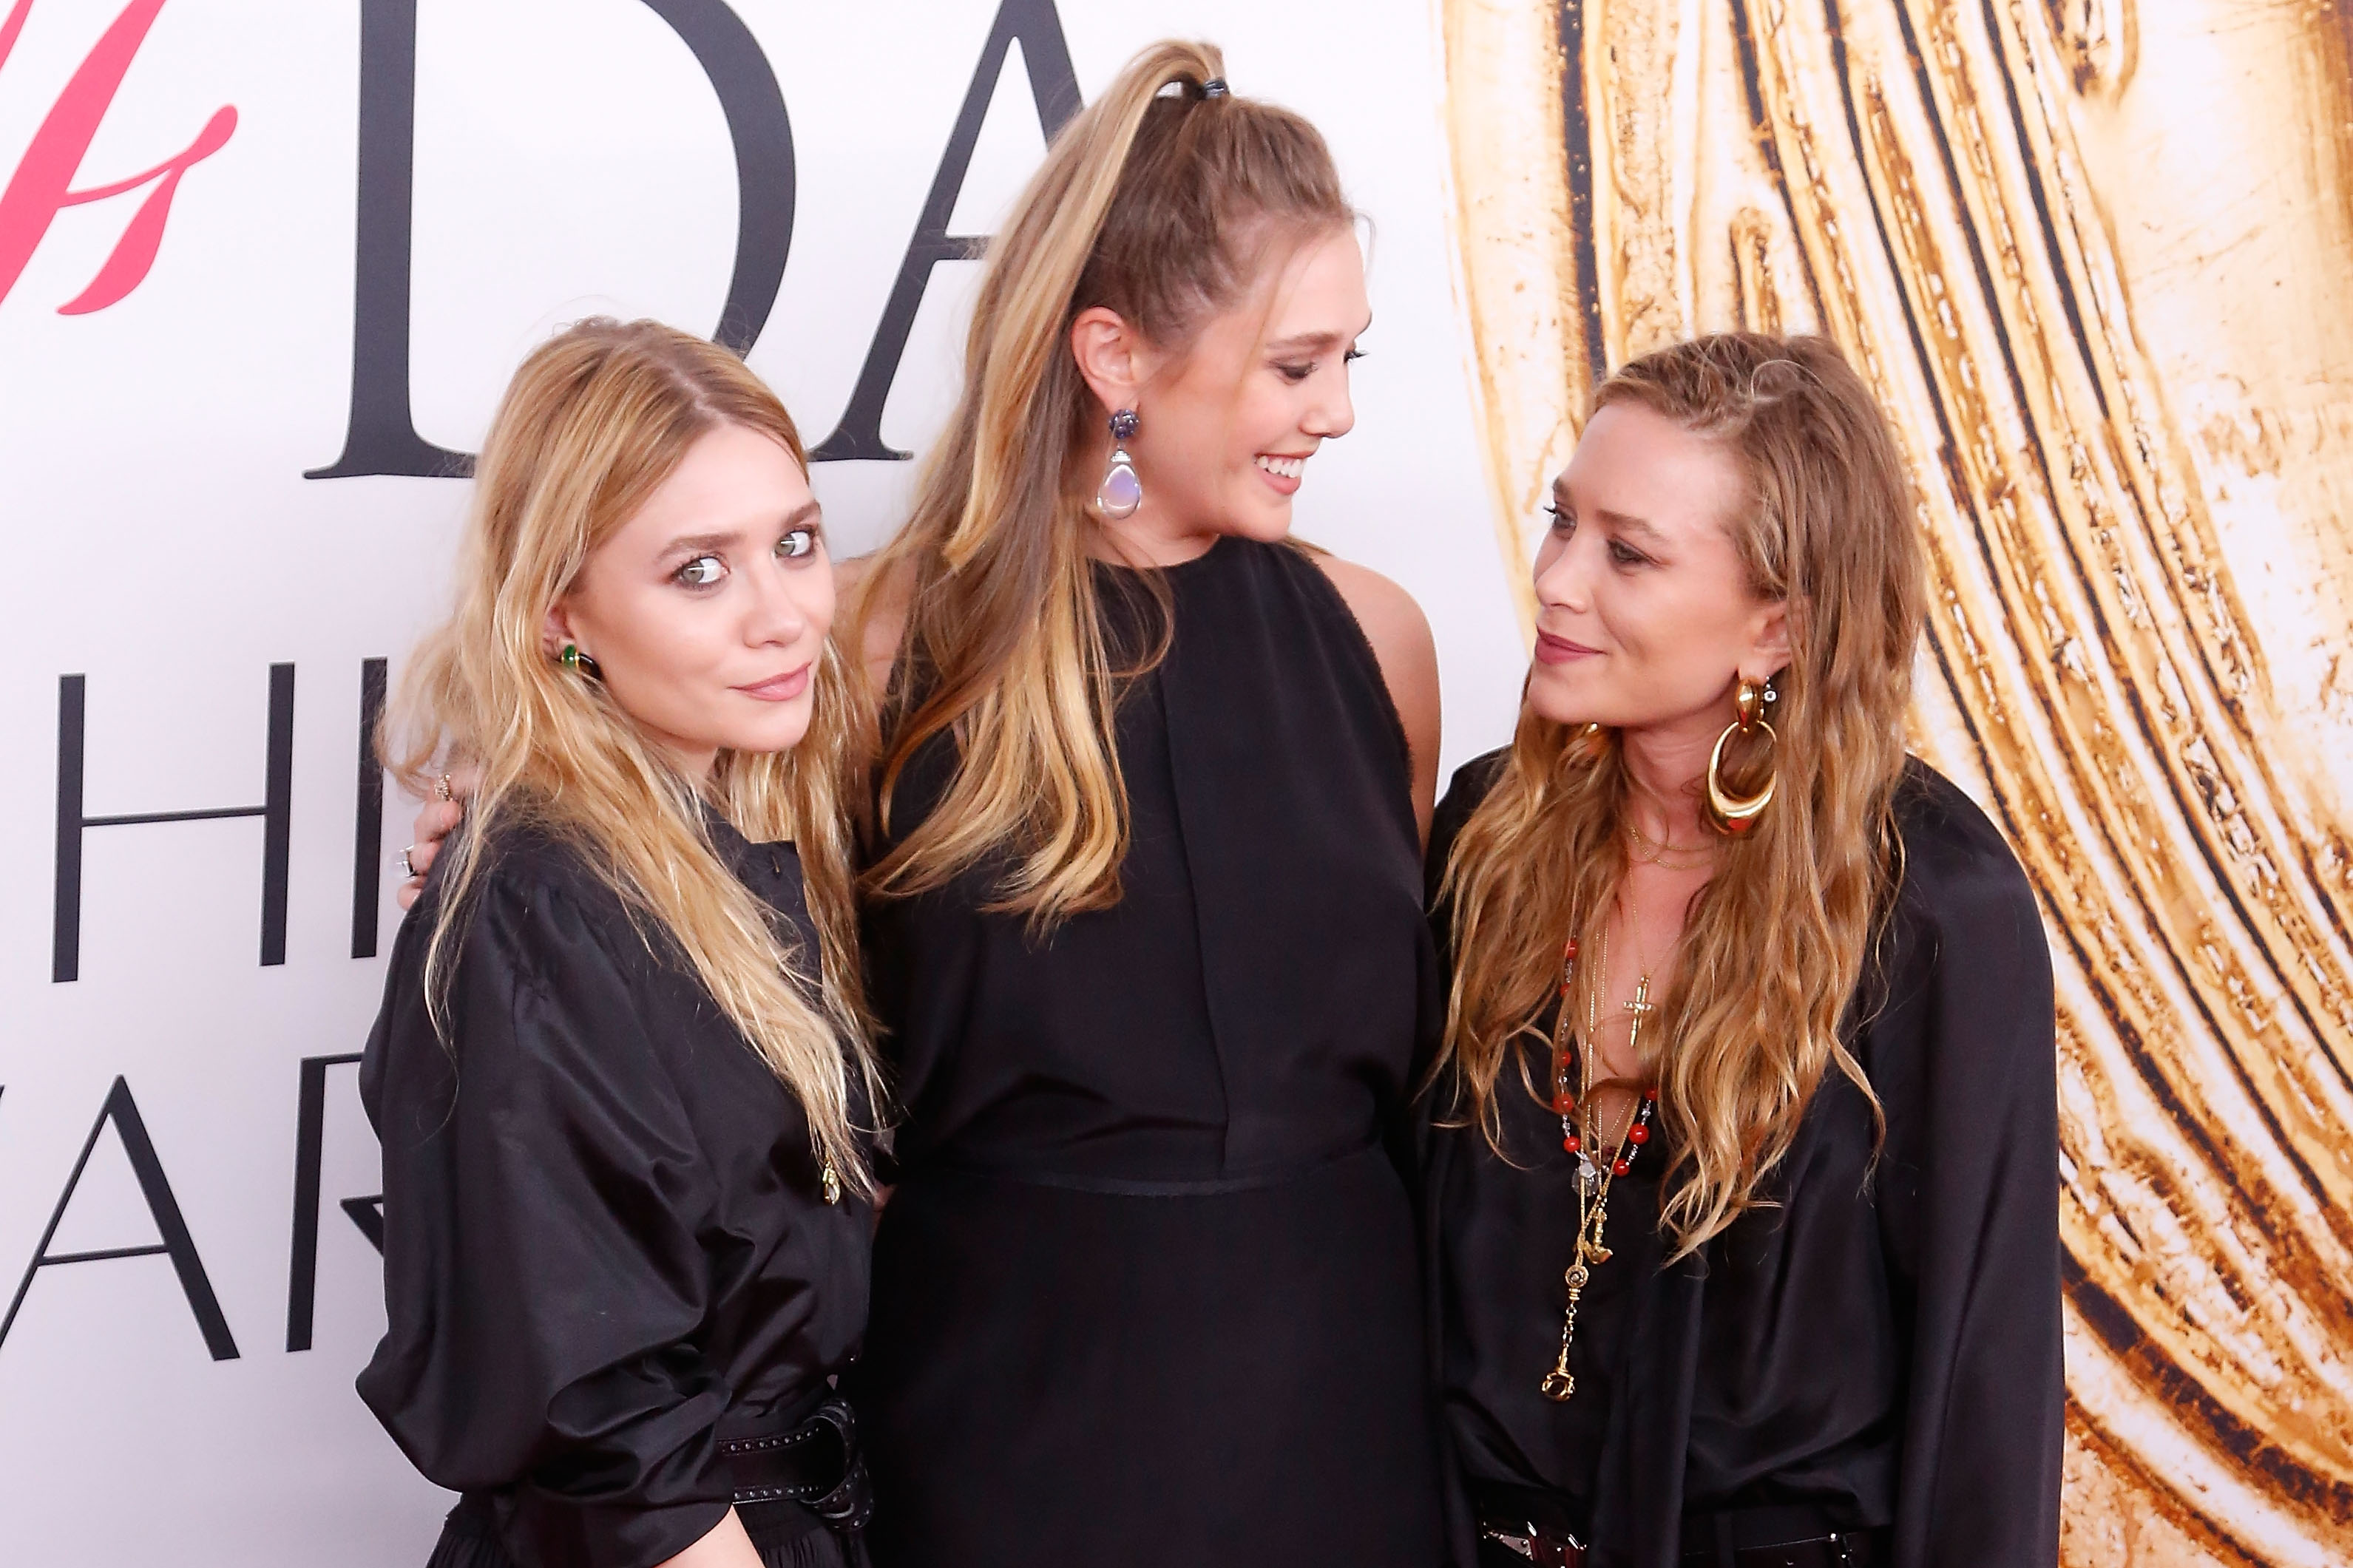 Ashley Olsen, Elizabeth Olsen, and Mary-Kate Olsen smiling in all black at an event.